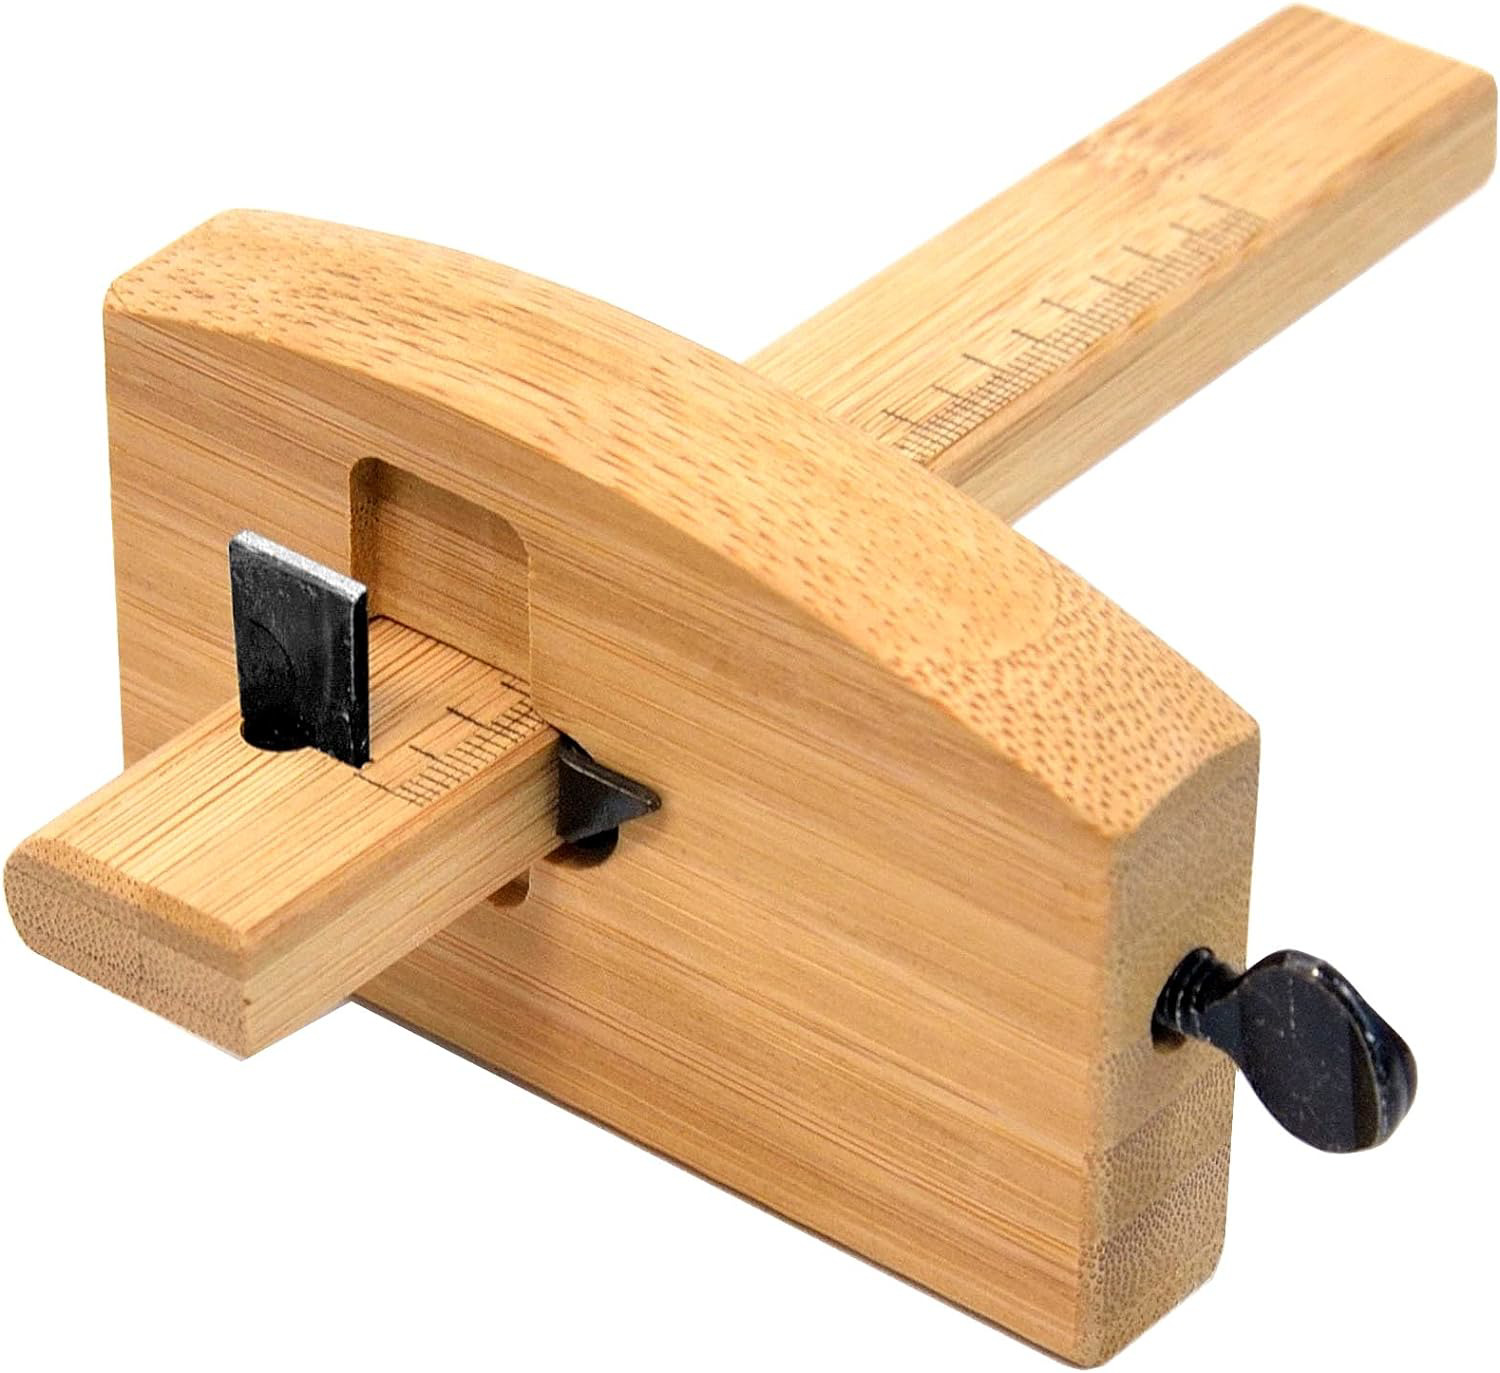 KAKURI Wood Marking Gauge Woodworking Tool 3.5 / 90mm, Japanese Wood Scribe Tool